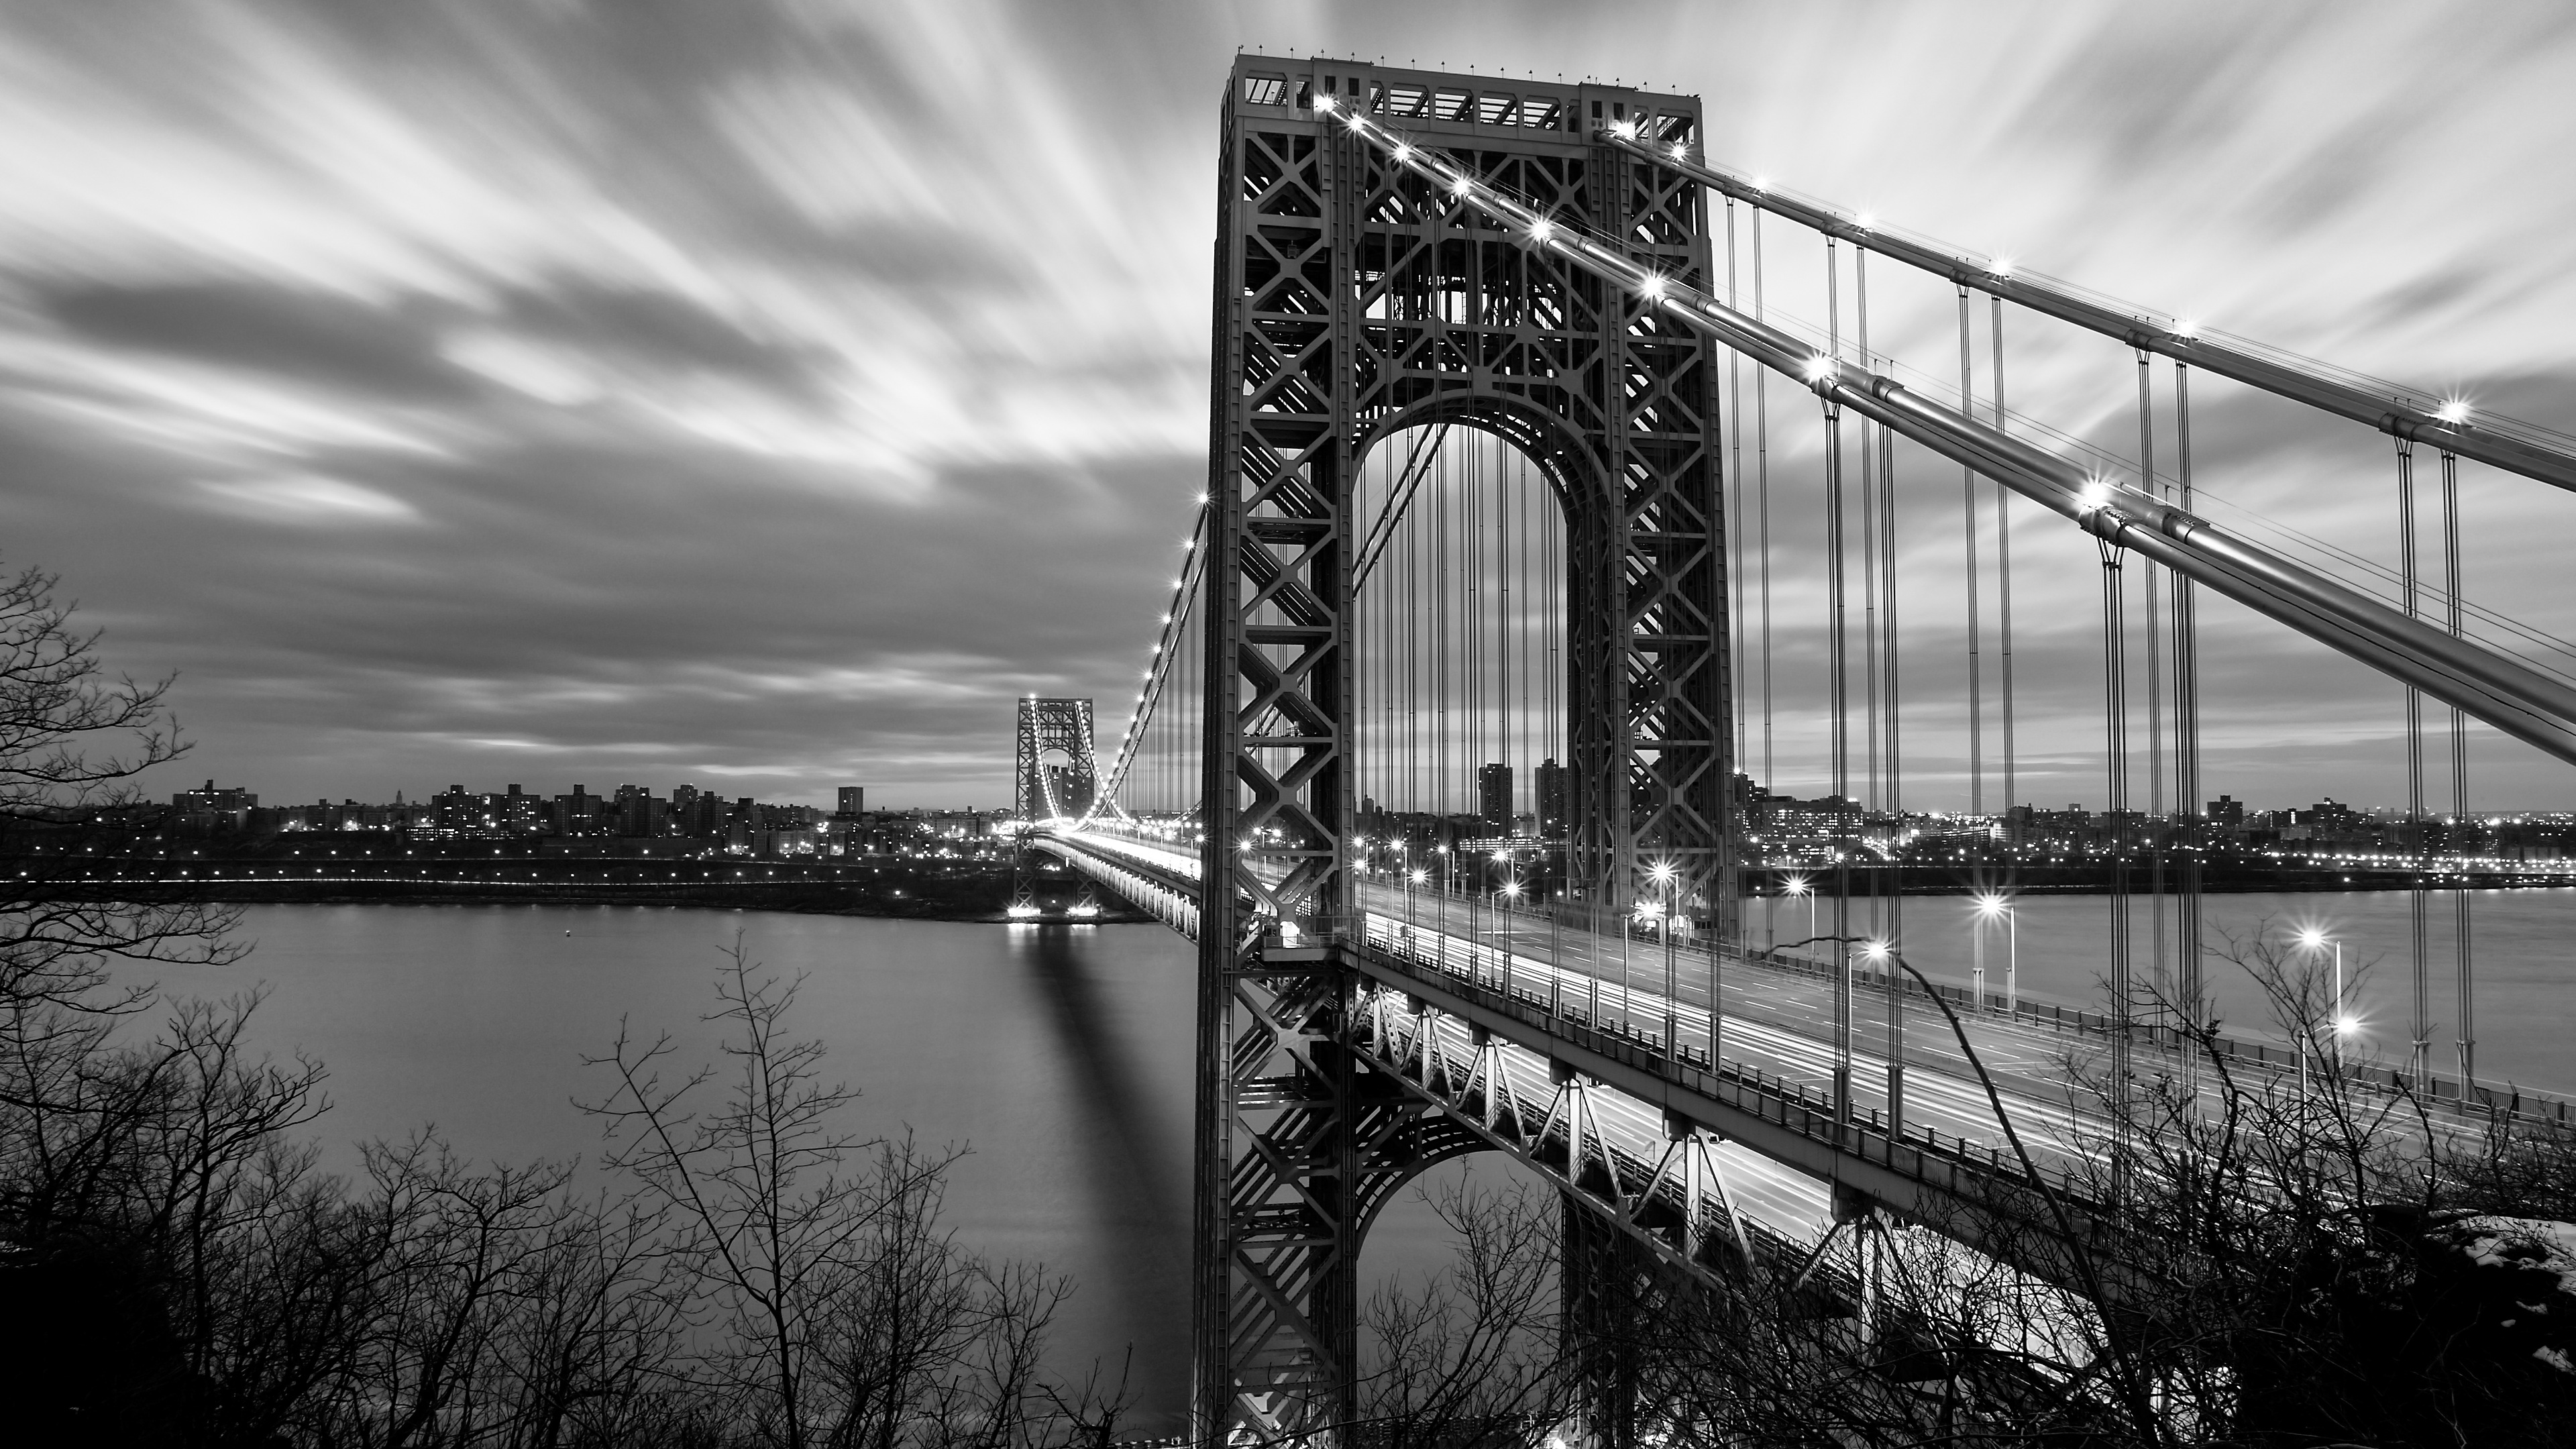 George Washington Bridge 4k Ultra Hd Desktop Wallpaper Download High Resolution 4k Wallpaper